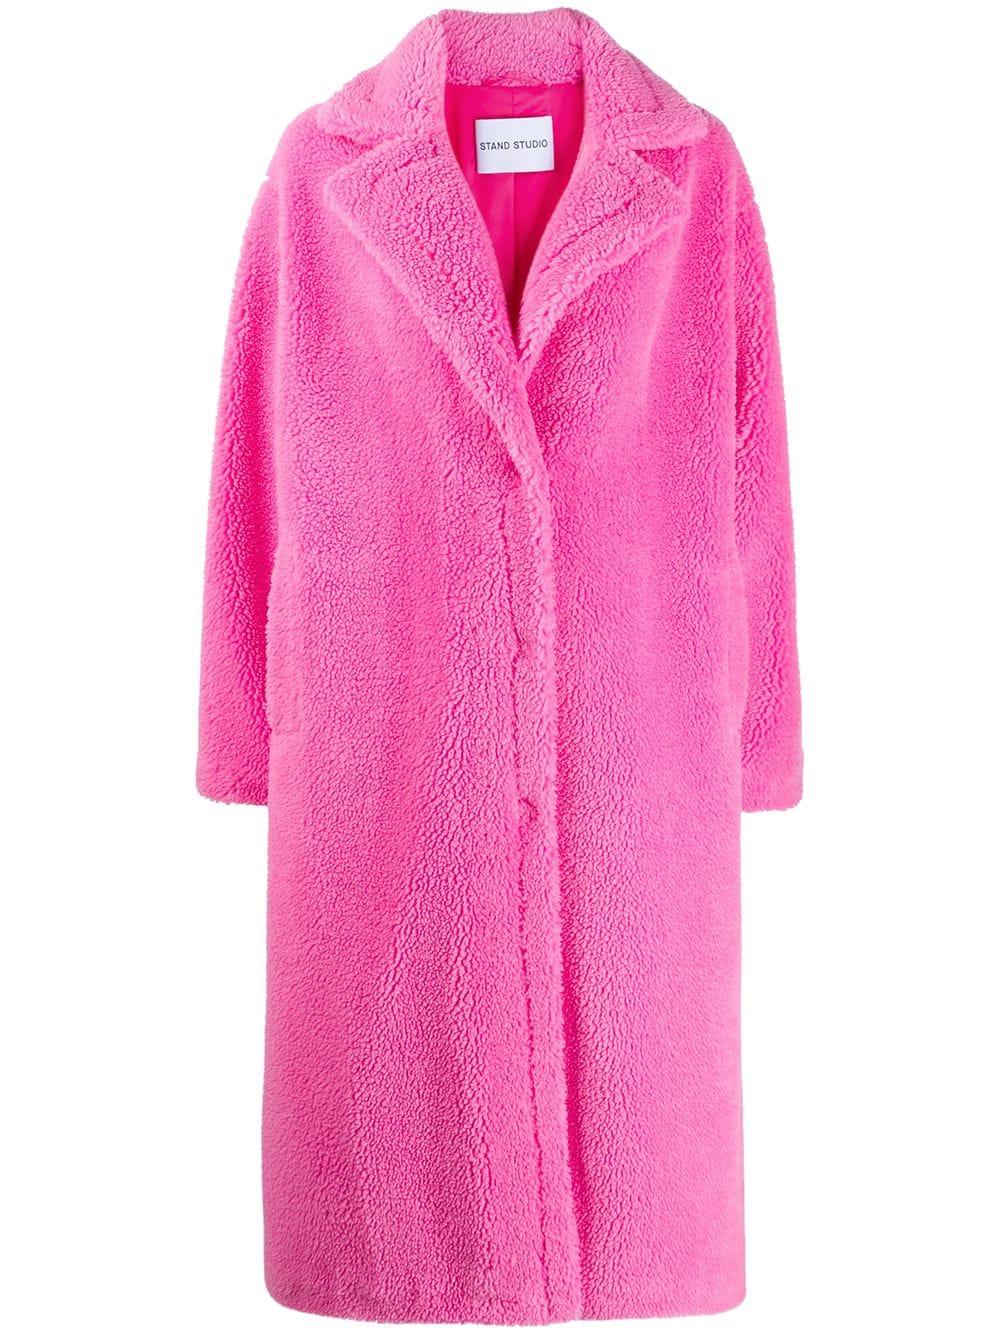 Stand Studio Bubble Gum Coat in Pink | Lyst